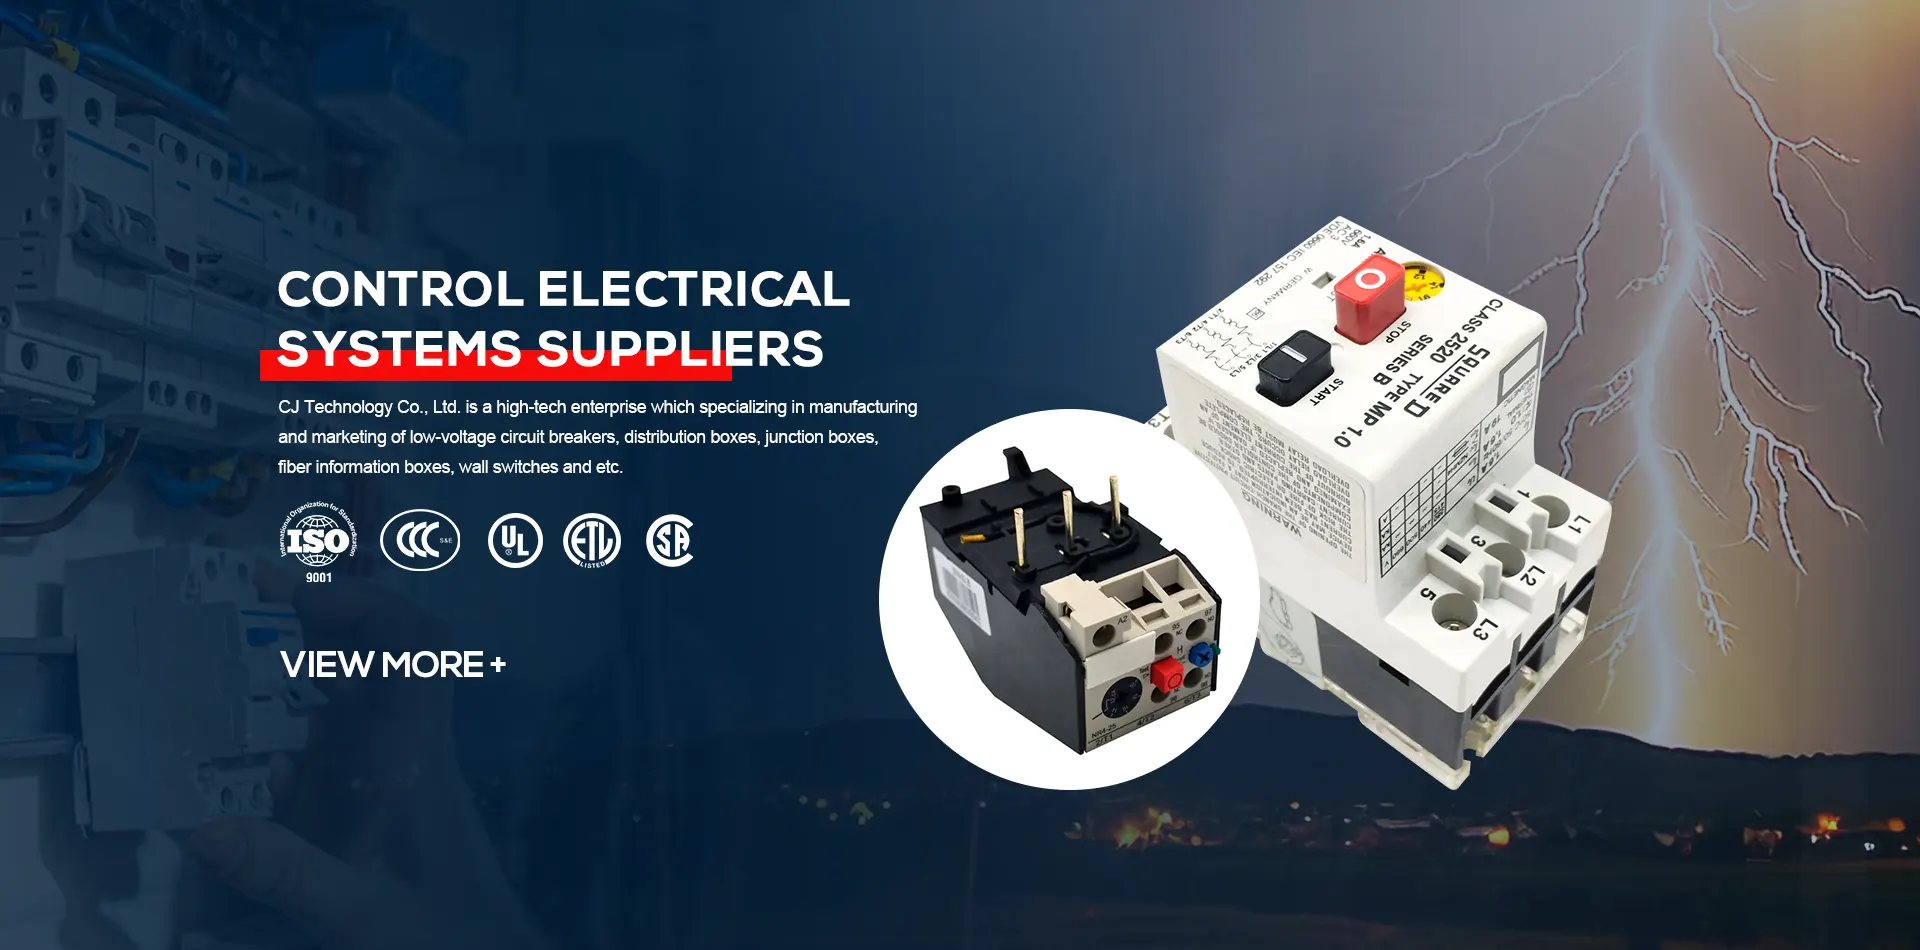 Fornecedores de sistemas elétricos de controle